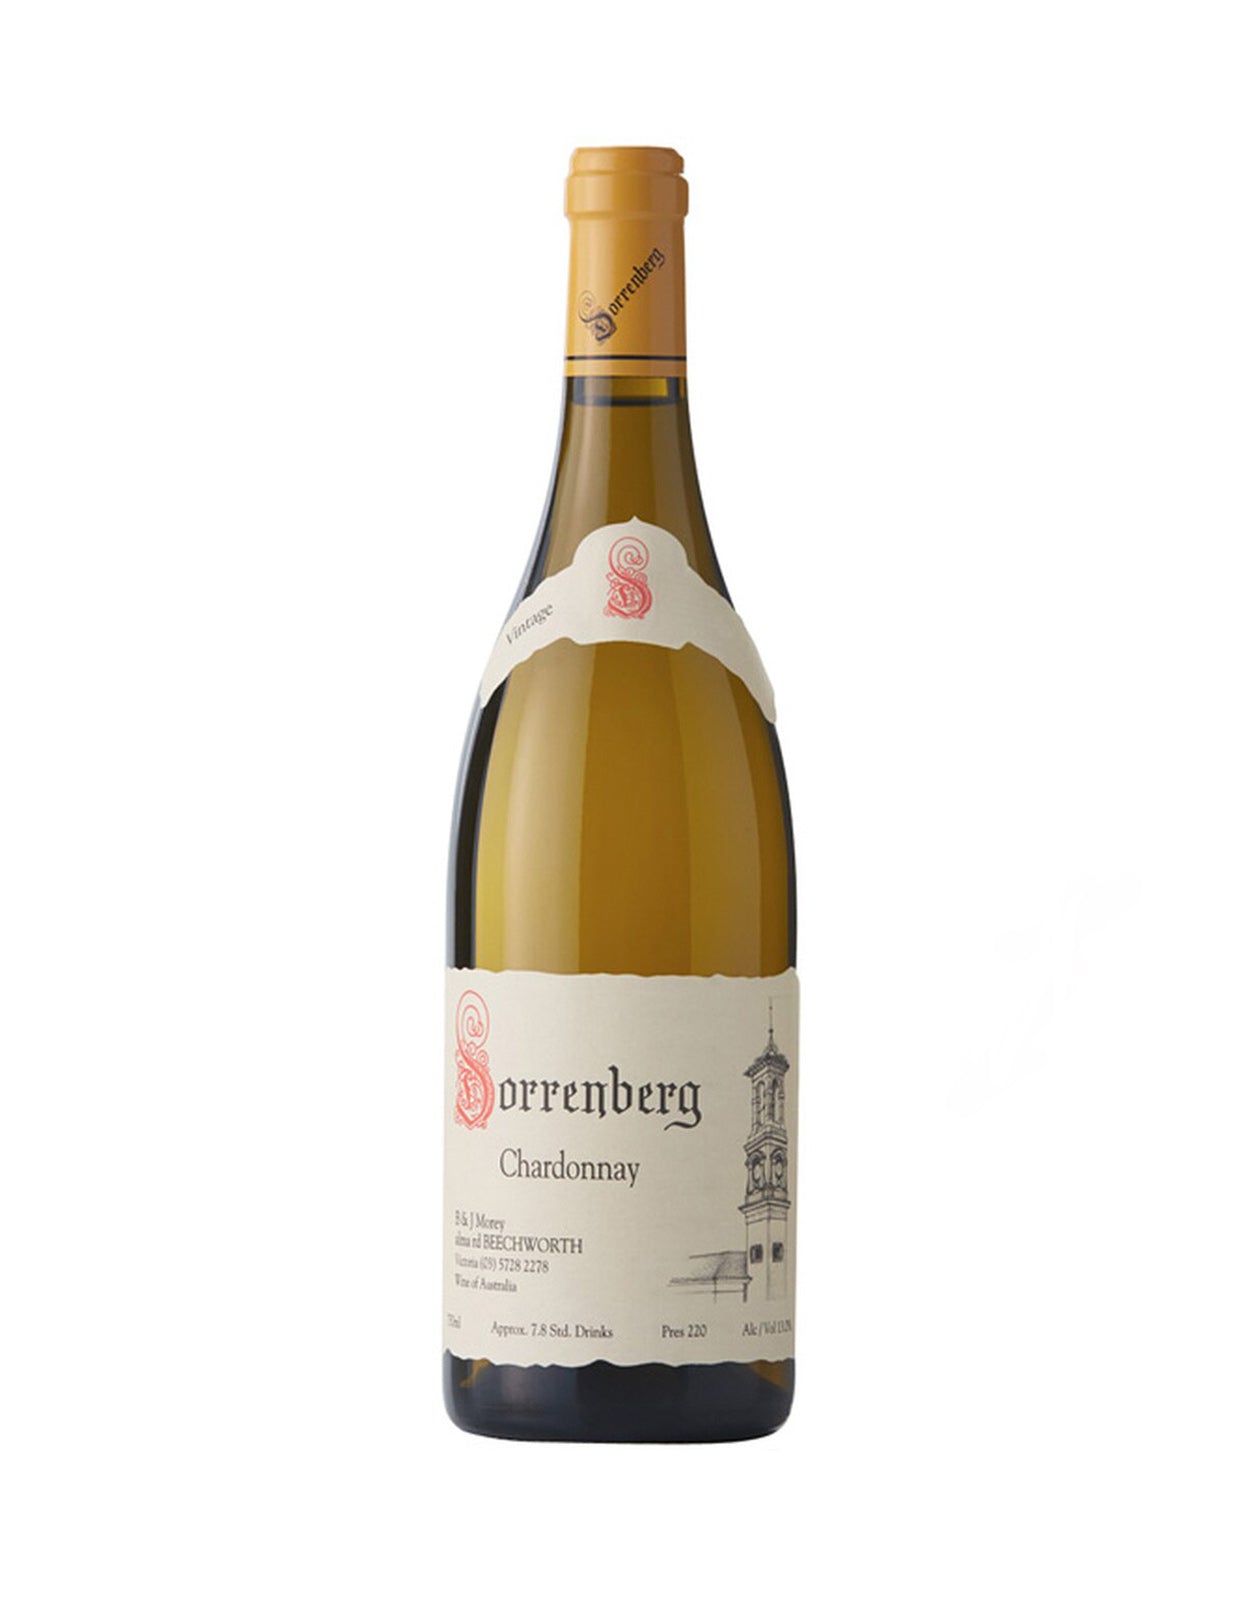 Sorrenberg Chardonnay 2017